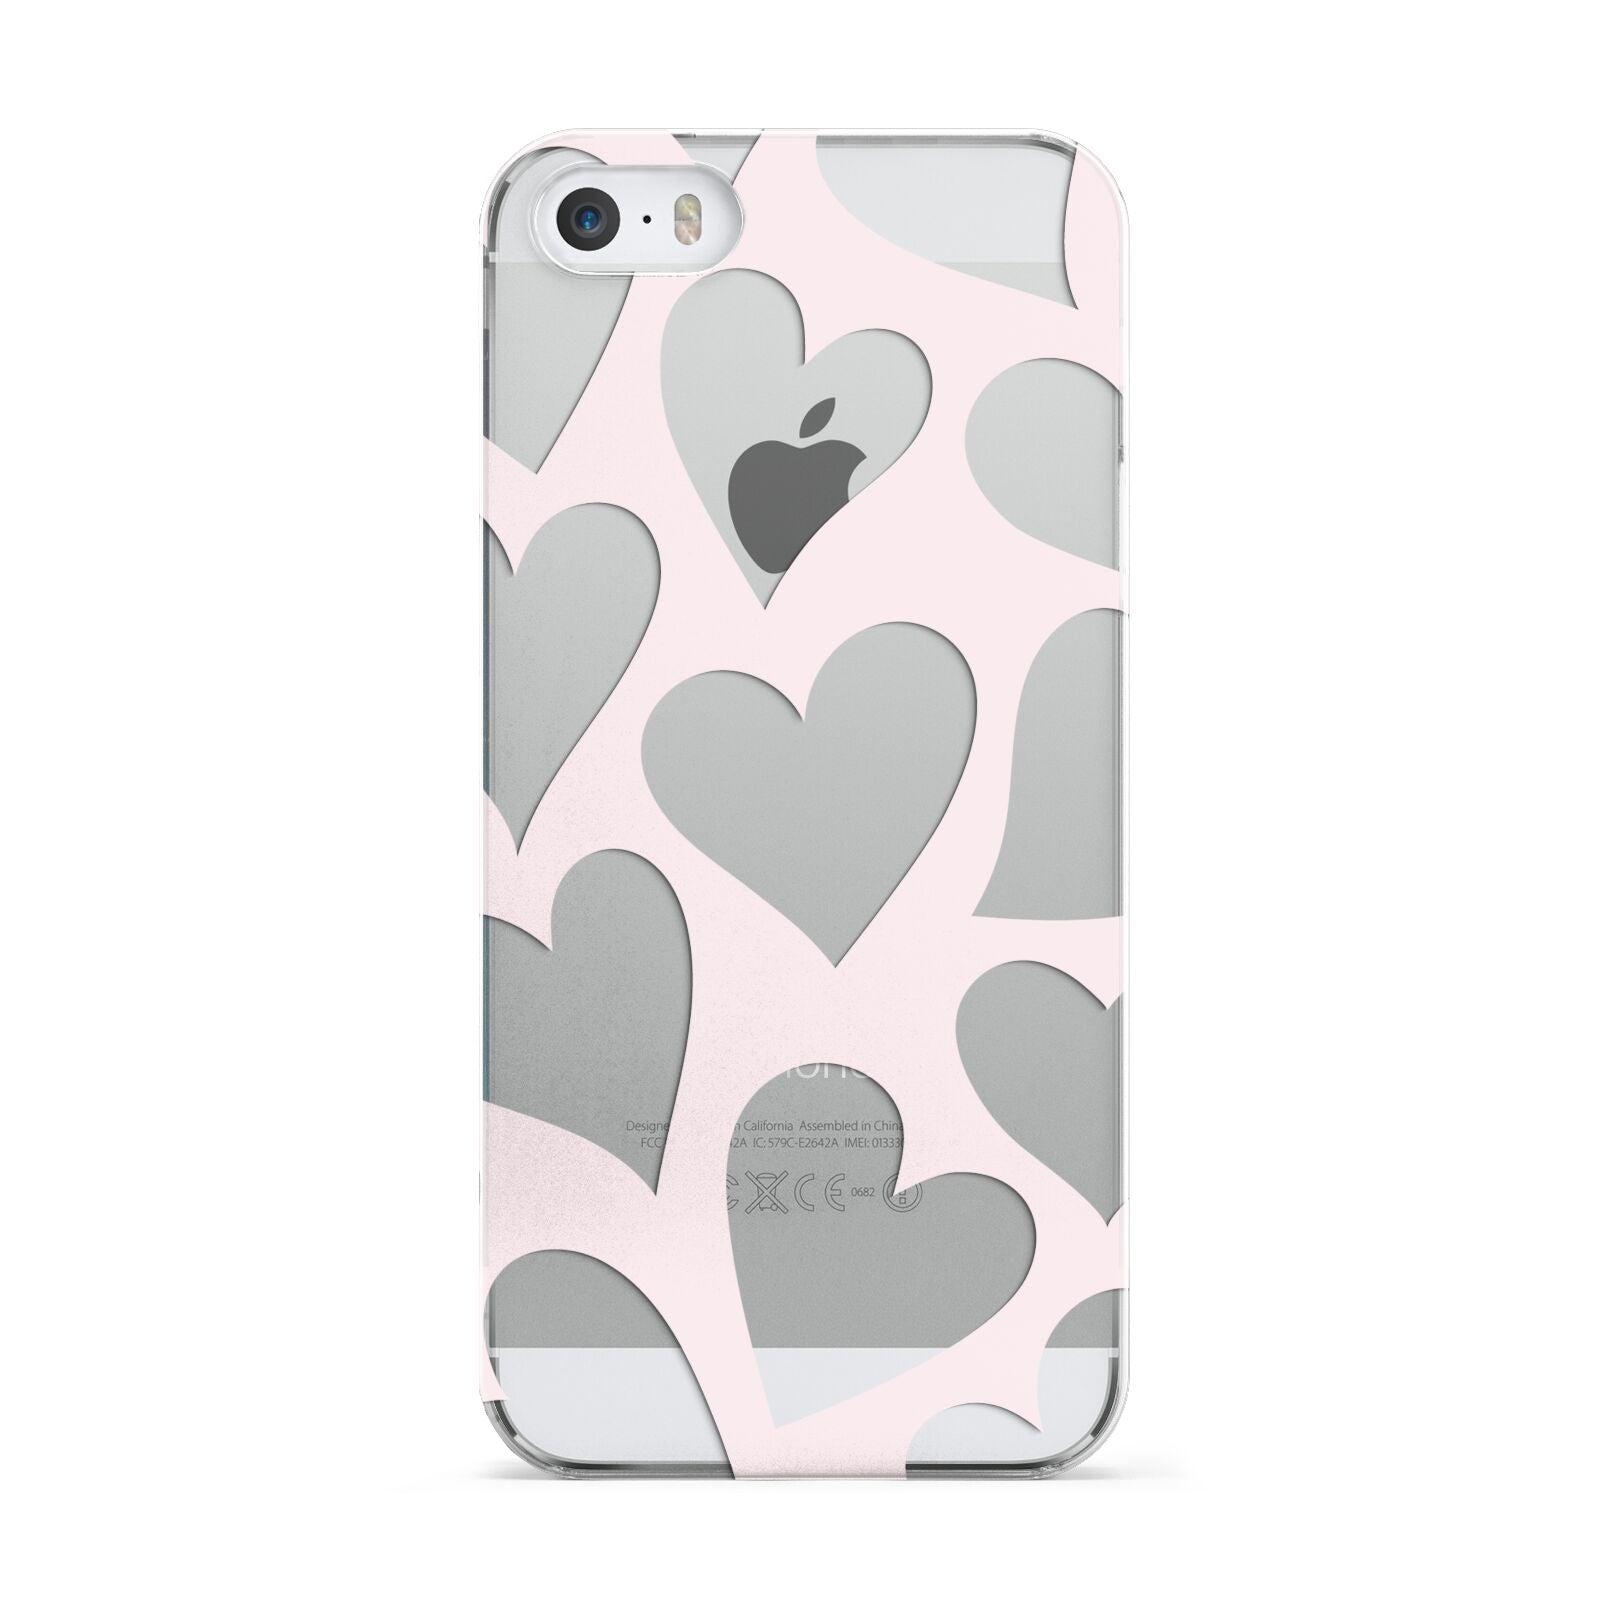 Heart Apple iPhone 5 Case